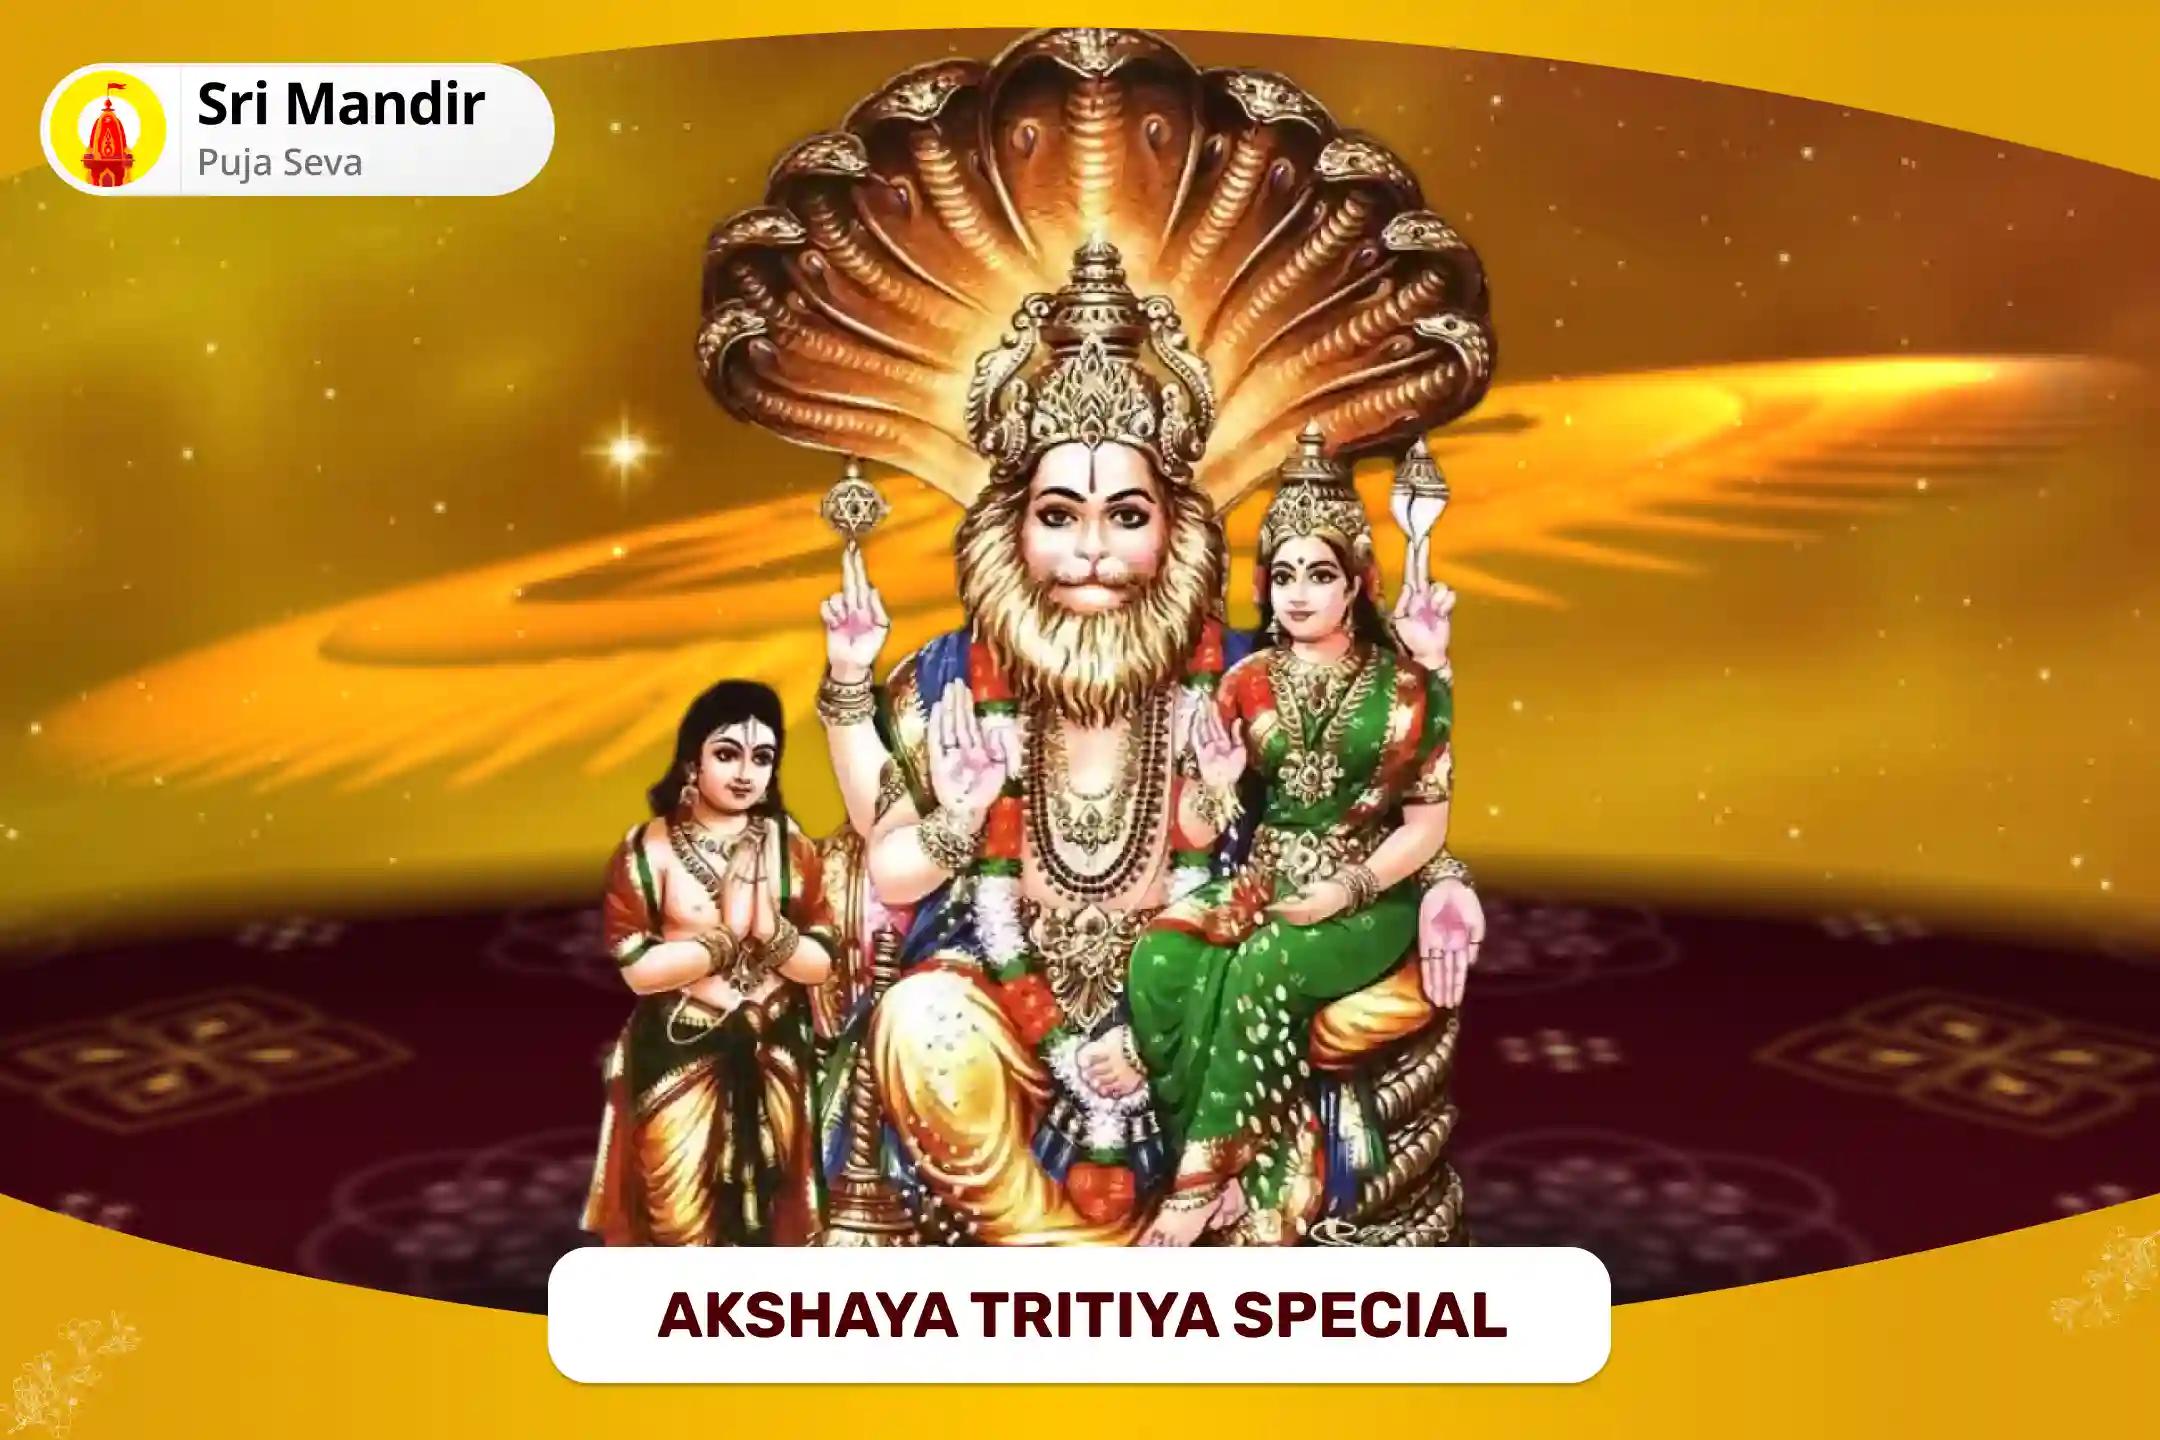 Akshaya Tritiya Special Lakshmi-Narasimha Yagya, Vastra Daan and Anna Daan for Financial Abundance and Material Well-being